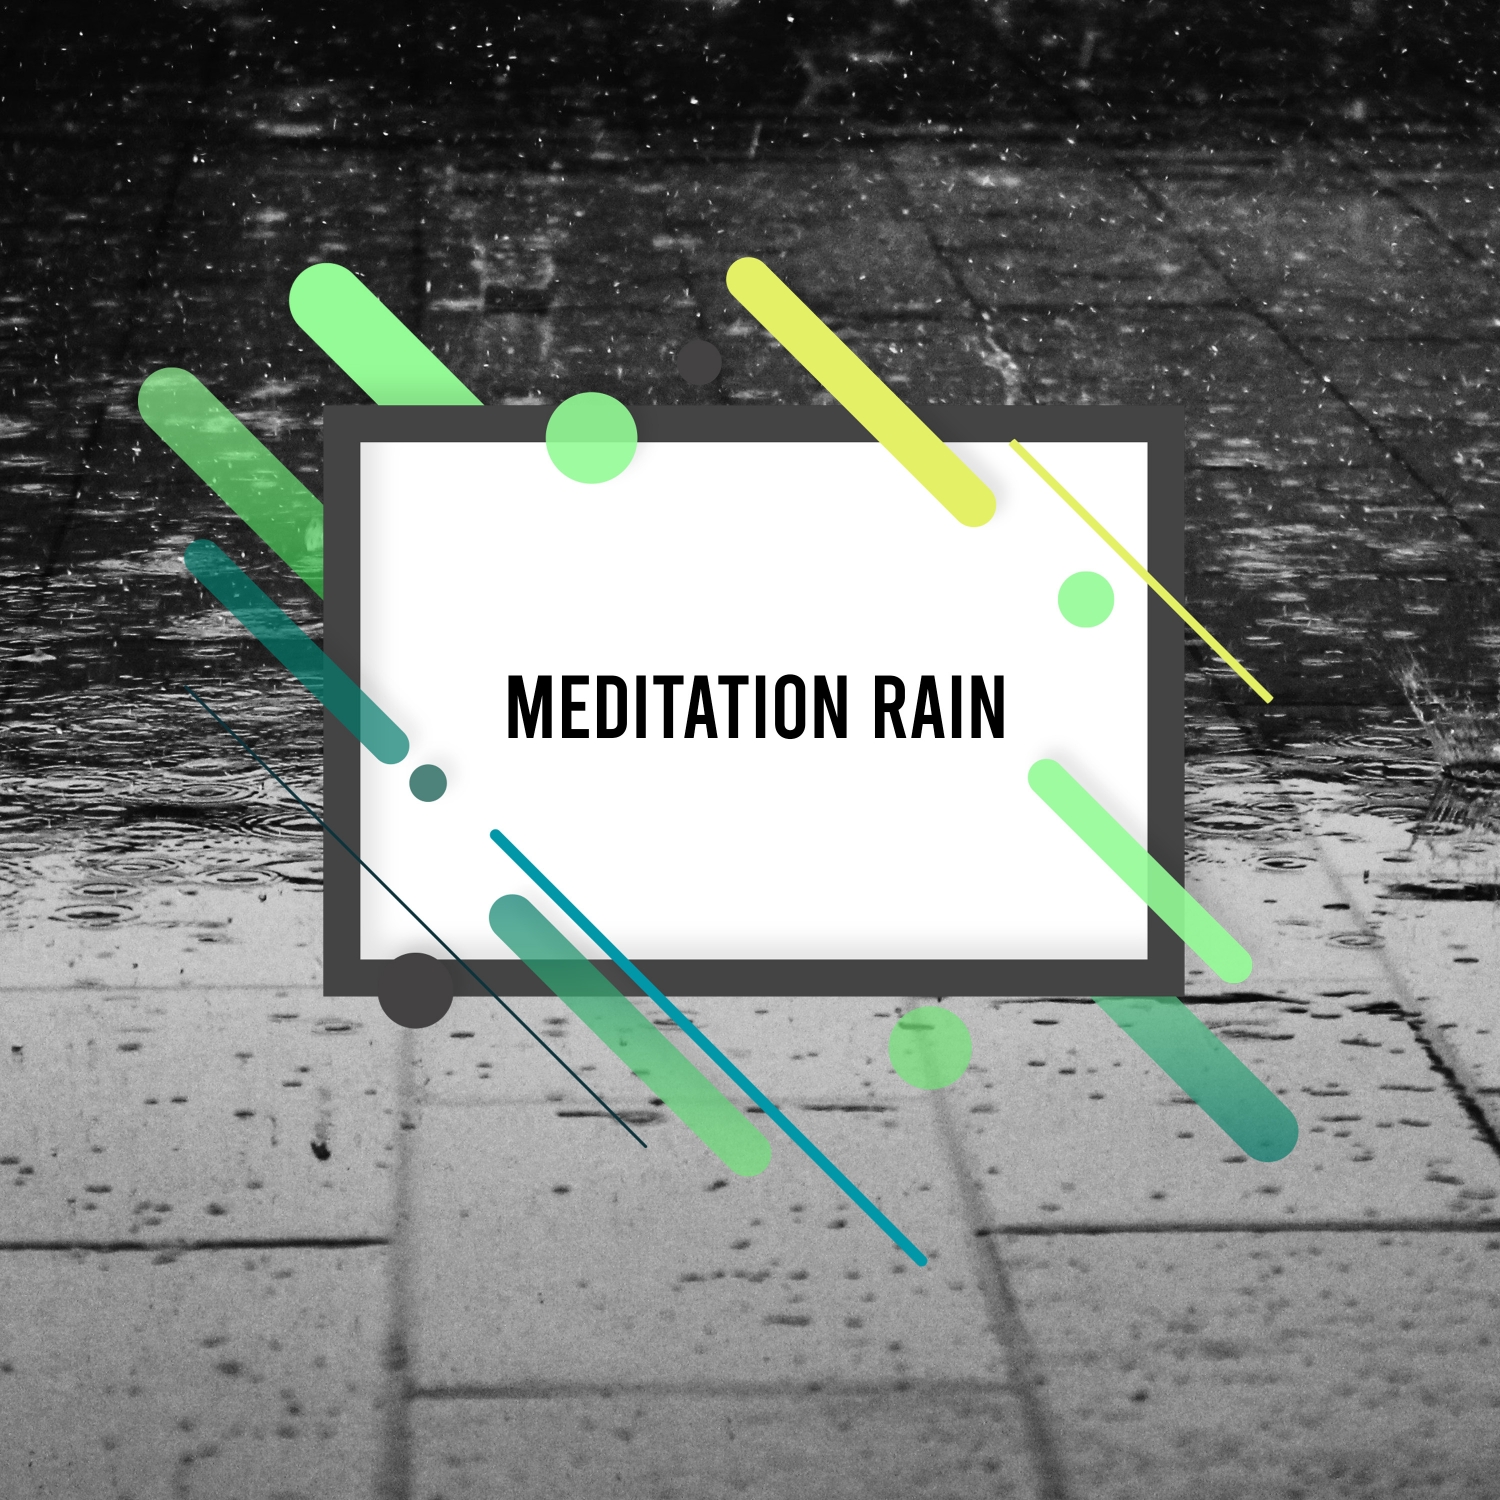 2017 Amazing Meditation Rain Sounds and Nature Sounds for Yoga